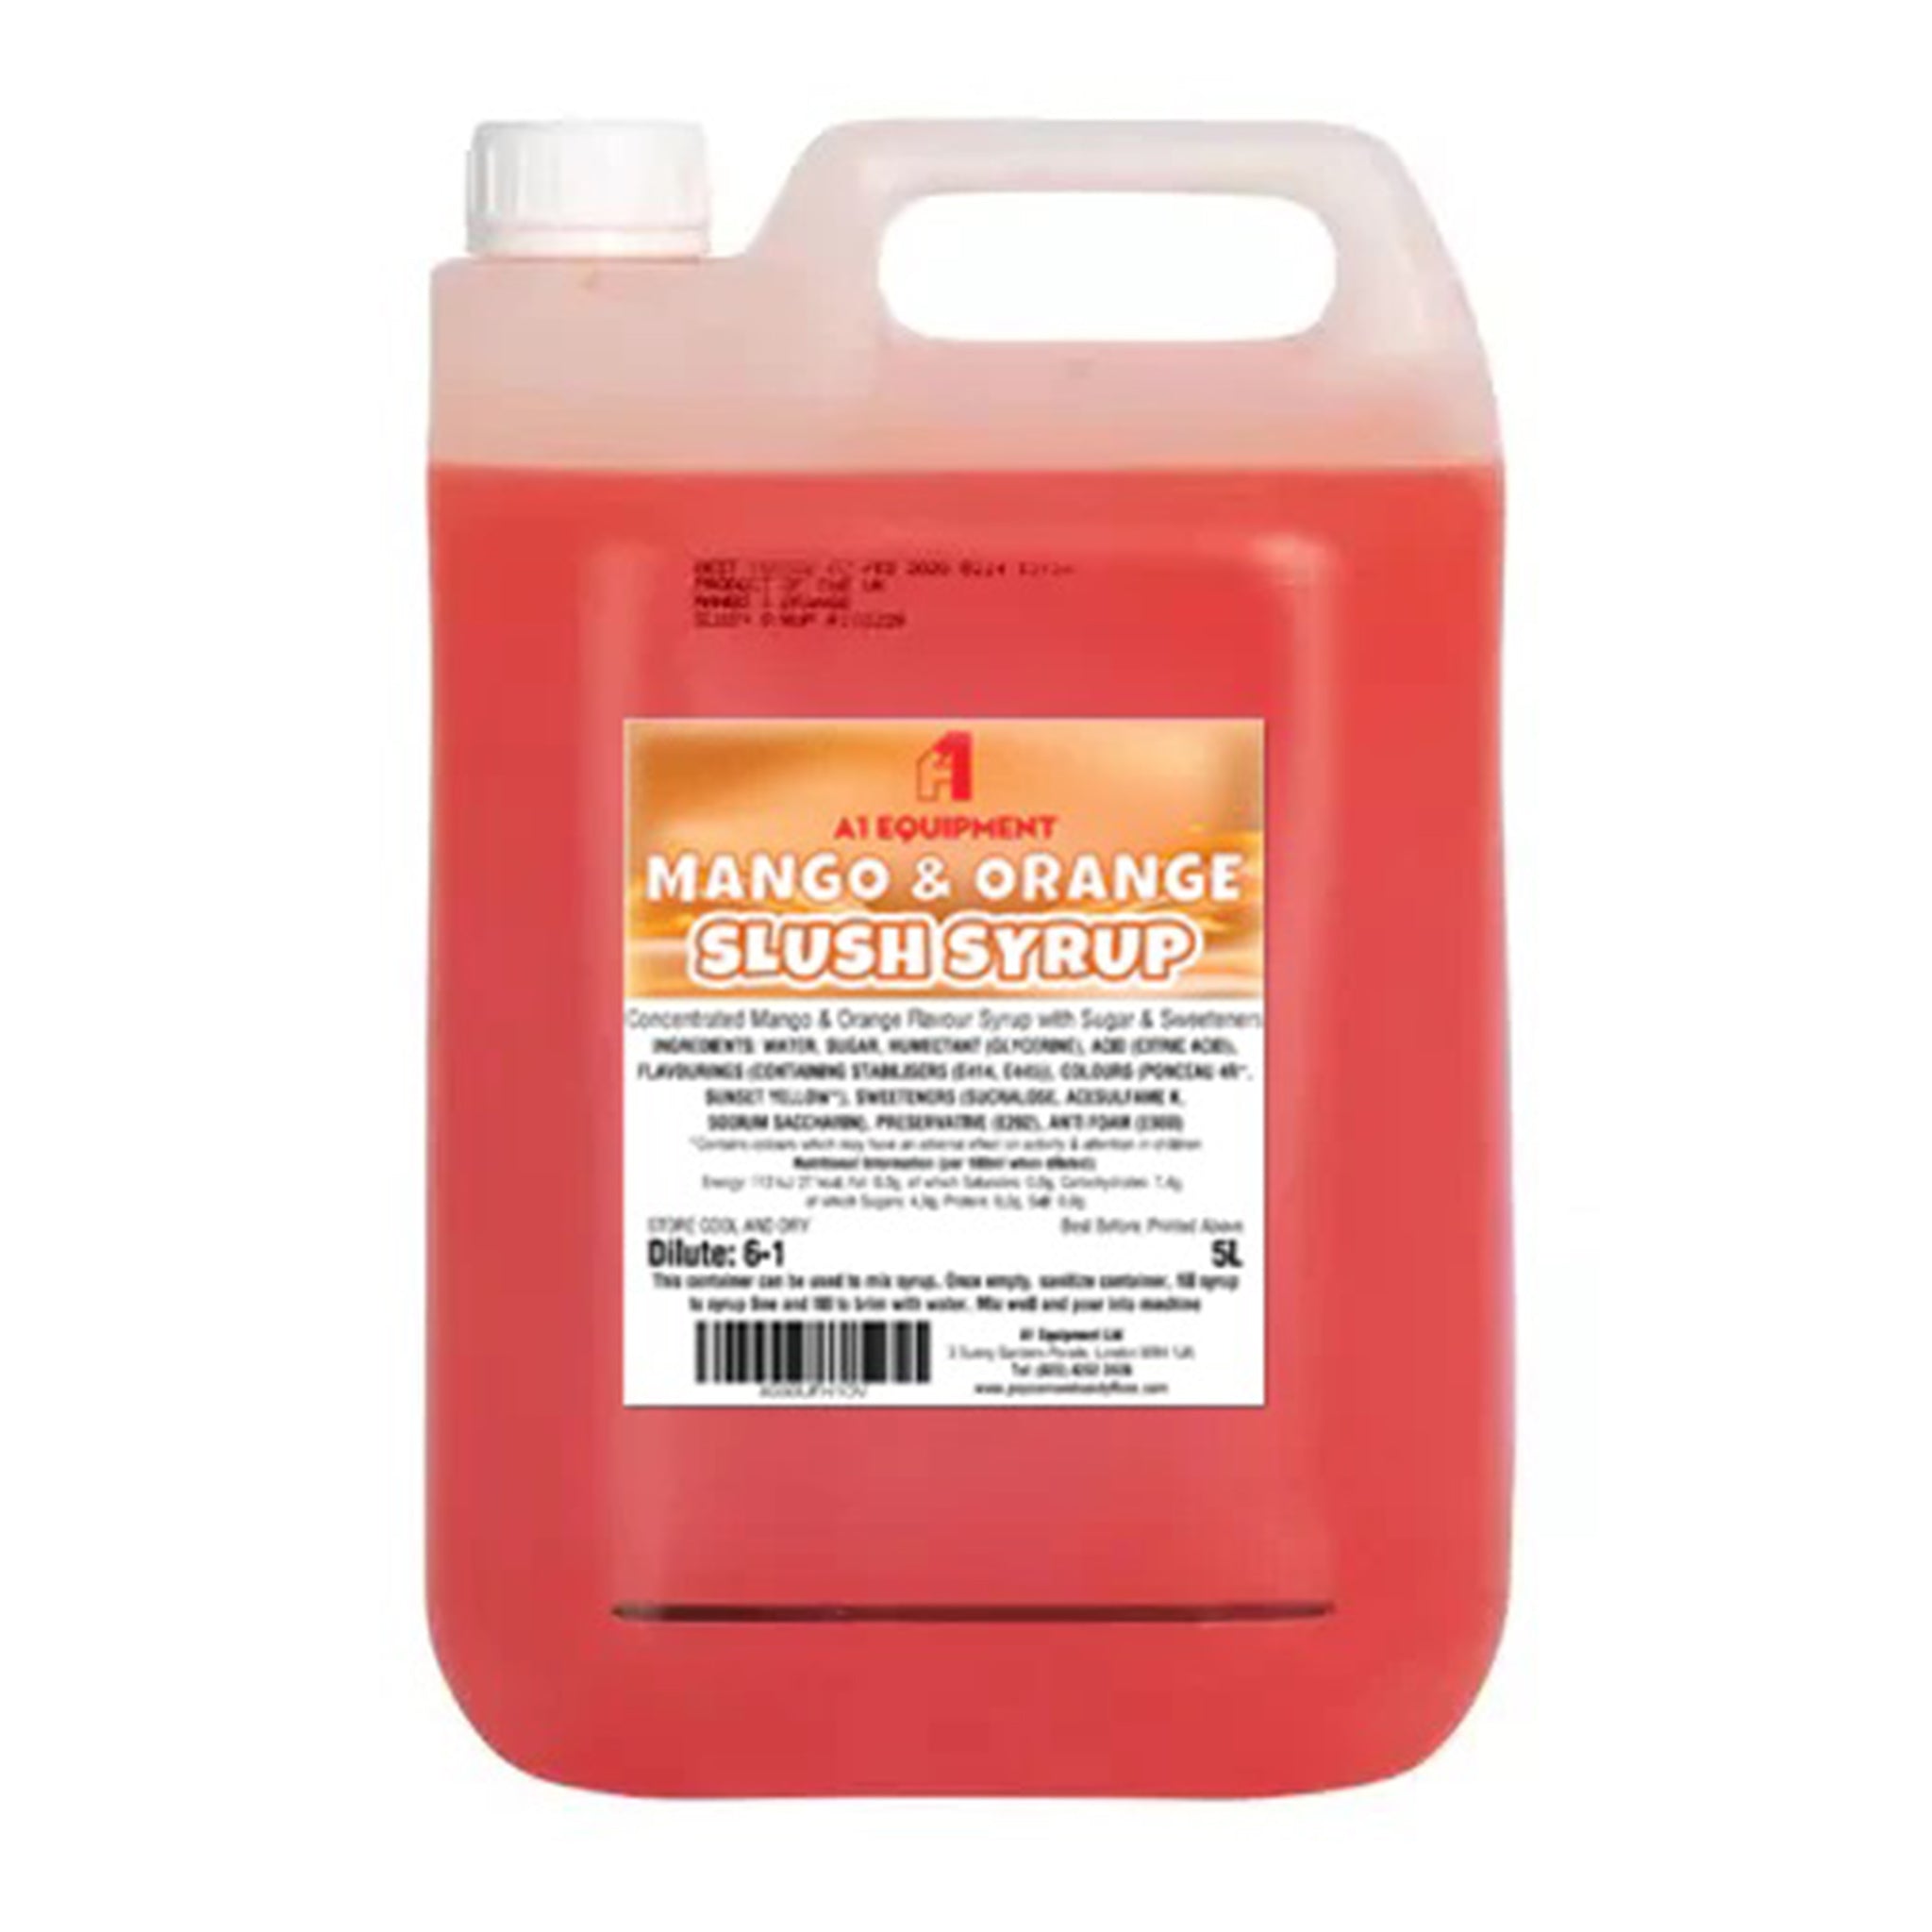 Slush Syrup 5L - All flavours 6-1 ratio